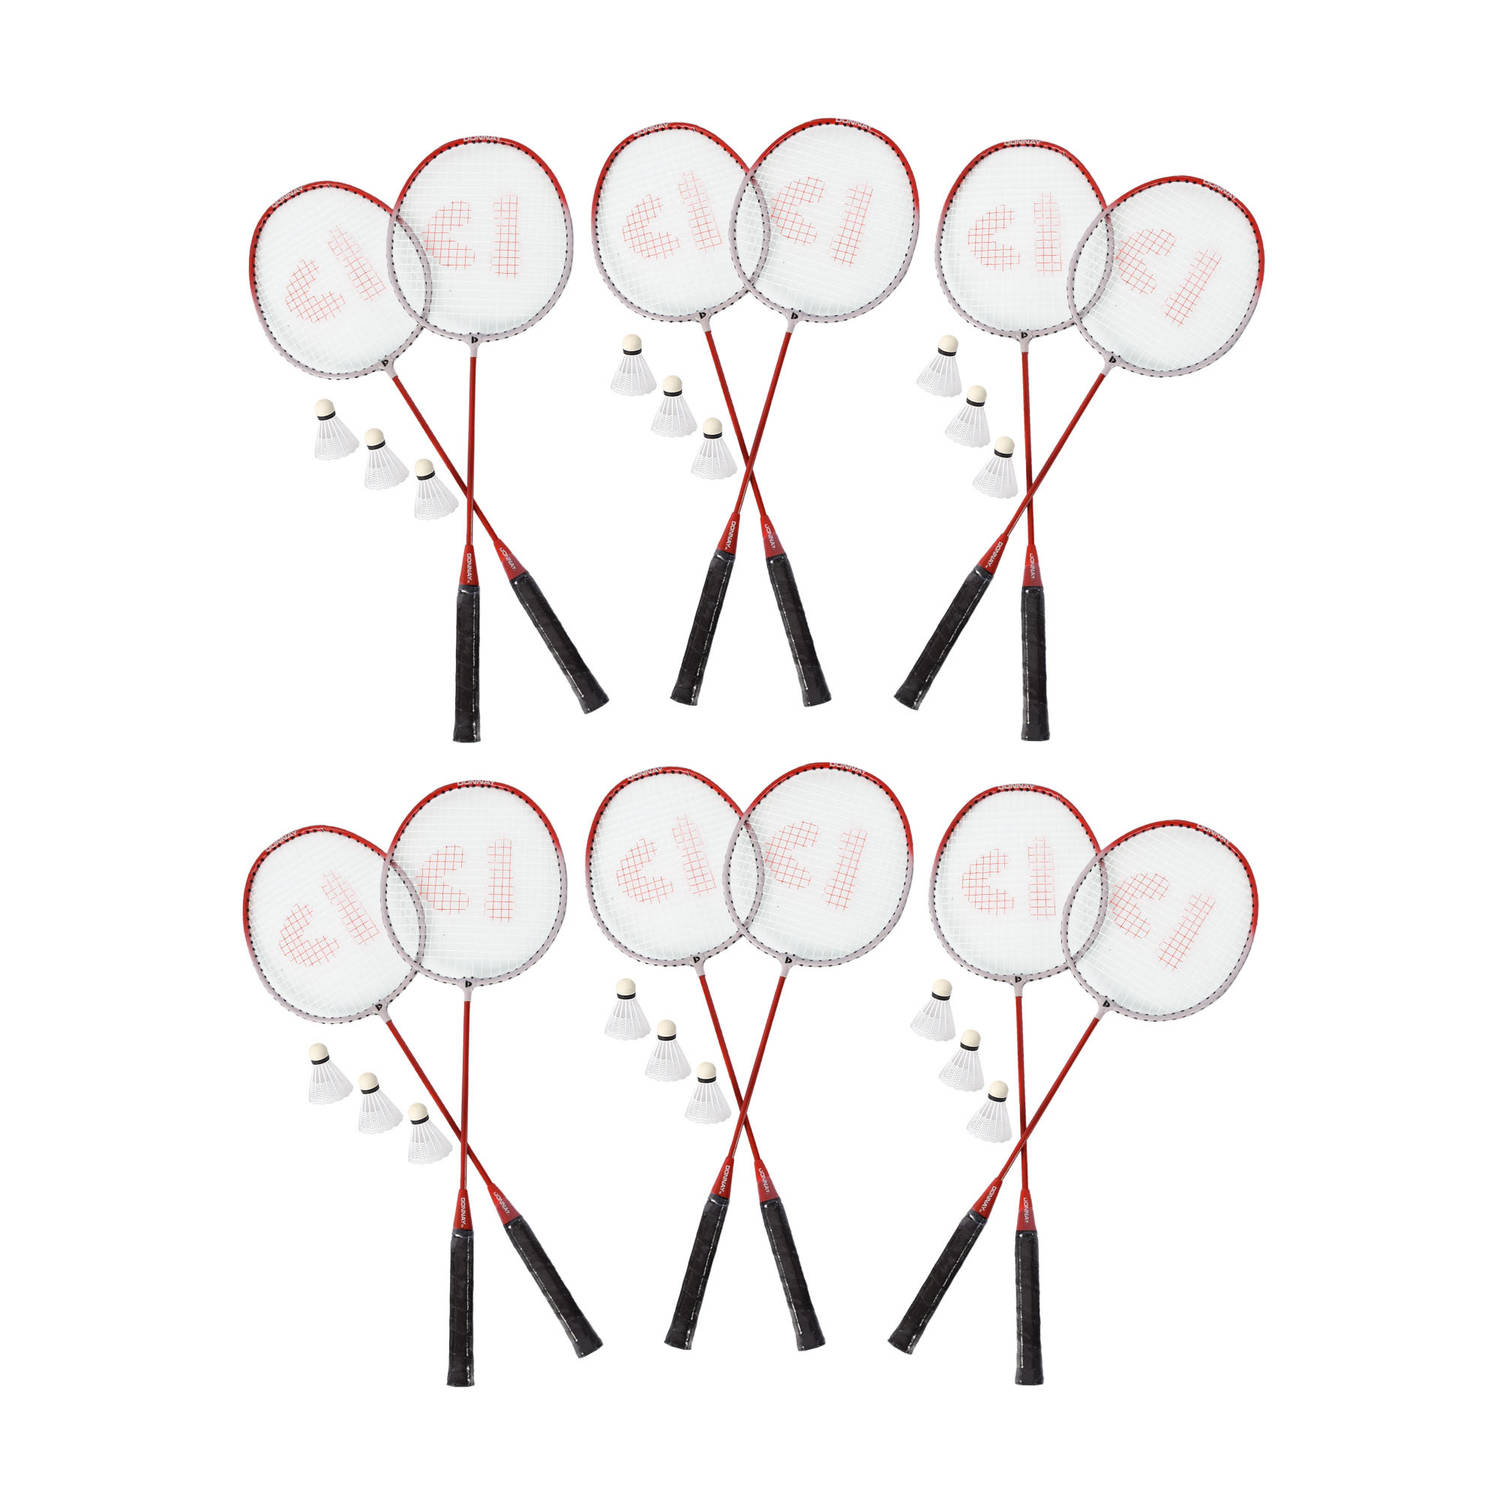 Voordelpak: Set van 6 Ultimate Badmintonset | 12x Aluminium Badminton Rackets | 18x Bio Plastic Shuttles | Geel | Inclusief Draagtas met elke Set